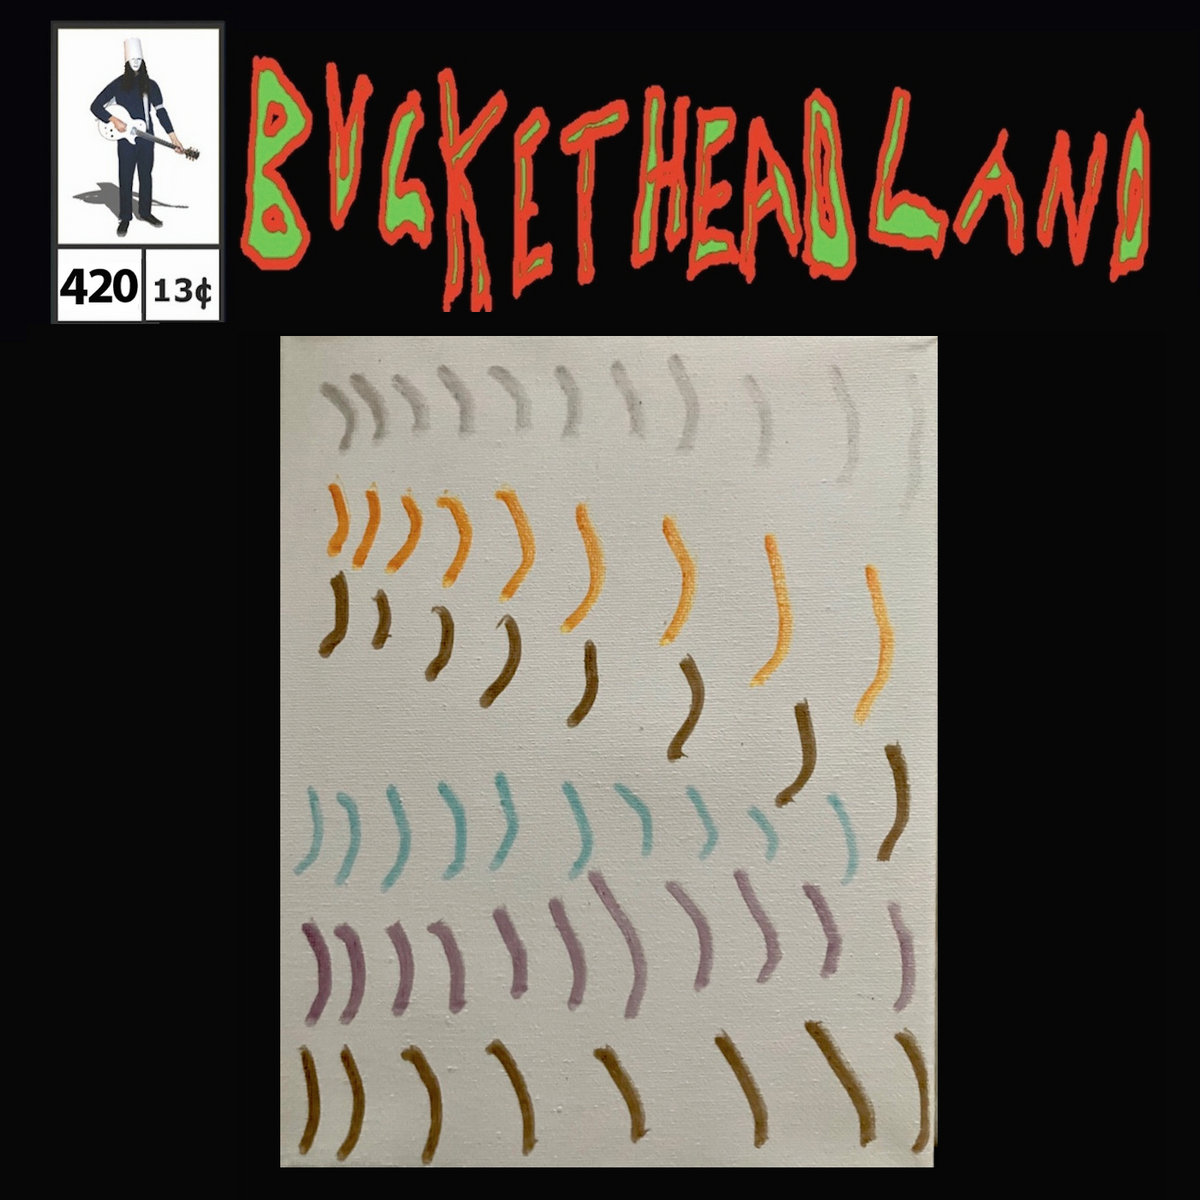 BUCKETHEAD - Pike 420 - Echoing Eyes cover 